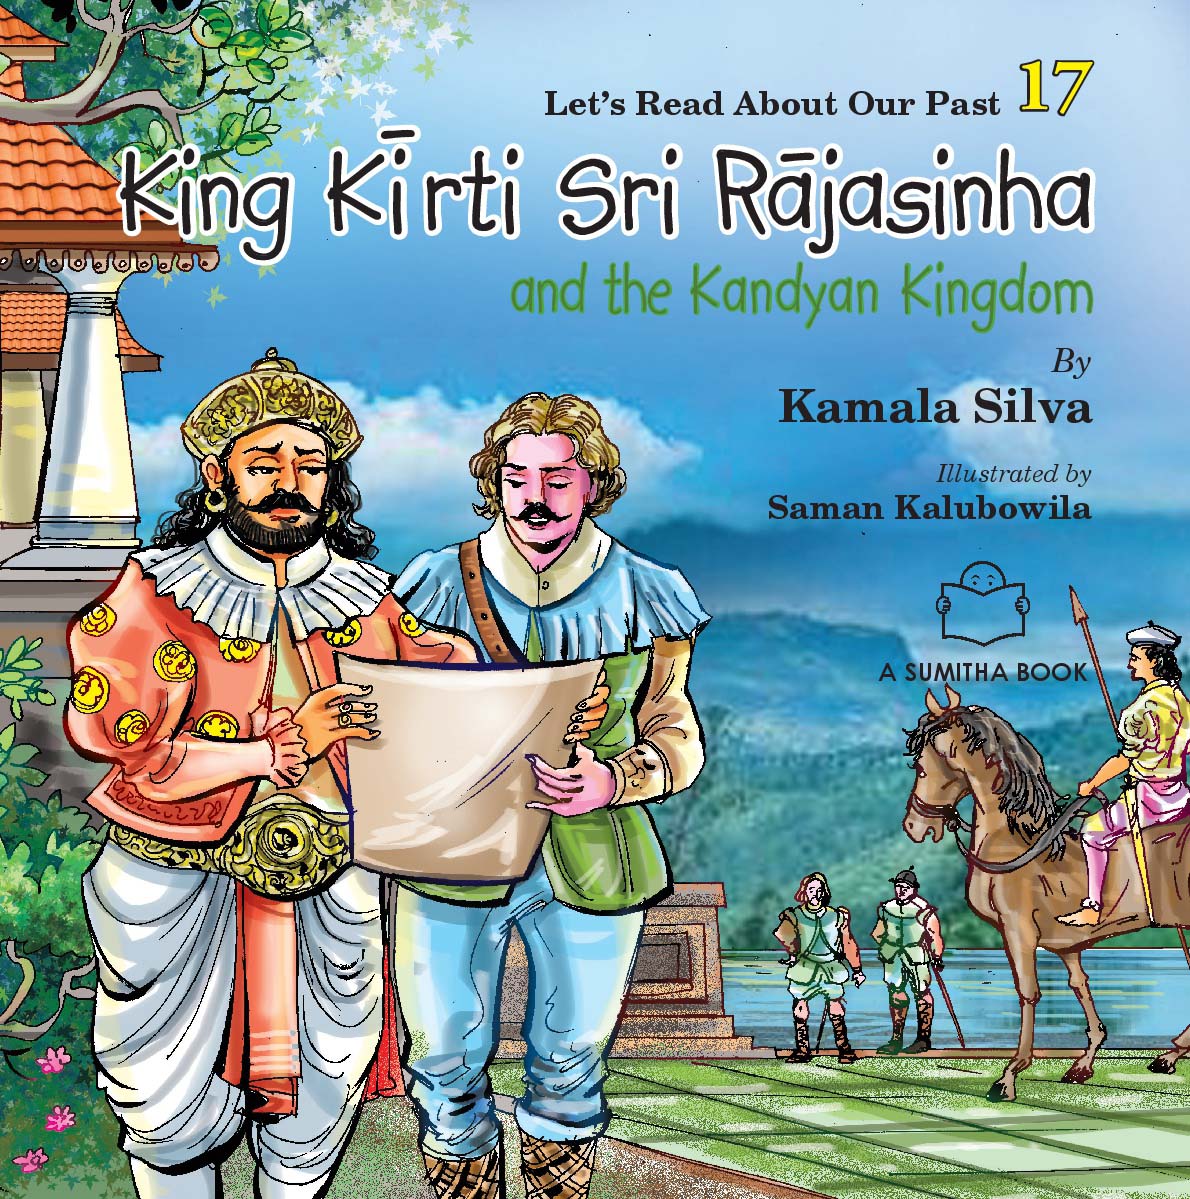 King Kirti Sri Rajasinha and the Kandyan Kingdom